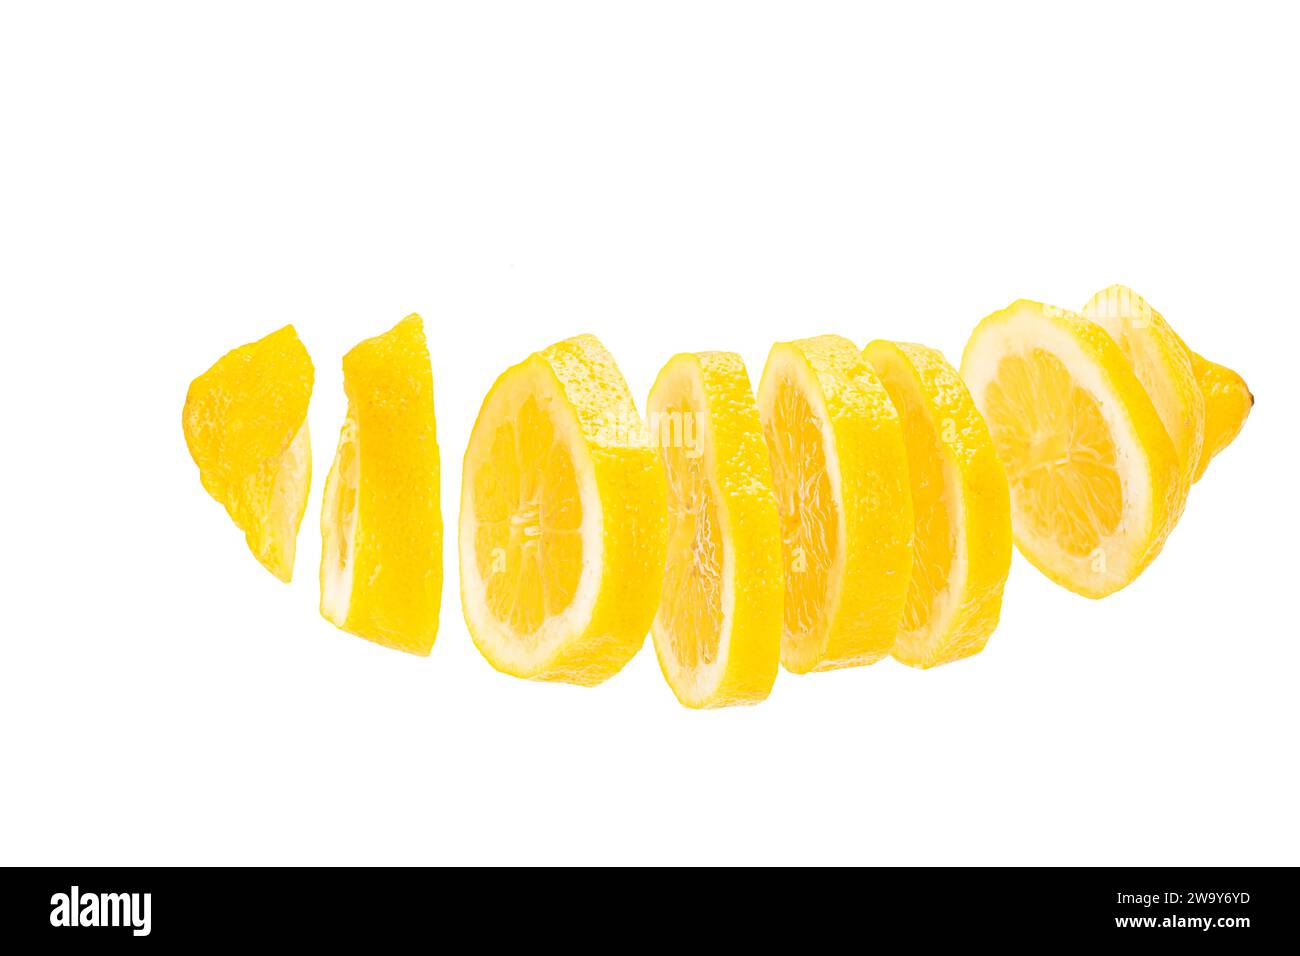 Zitrone in Scheiben geschnitten und frei schwebend vor weißem Hintergrund. Un limone tagliato a fette e collocato in fila davanti a uno sfondo bianco Foto Stock